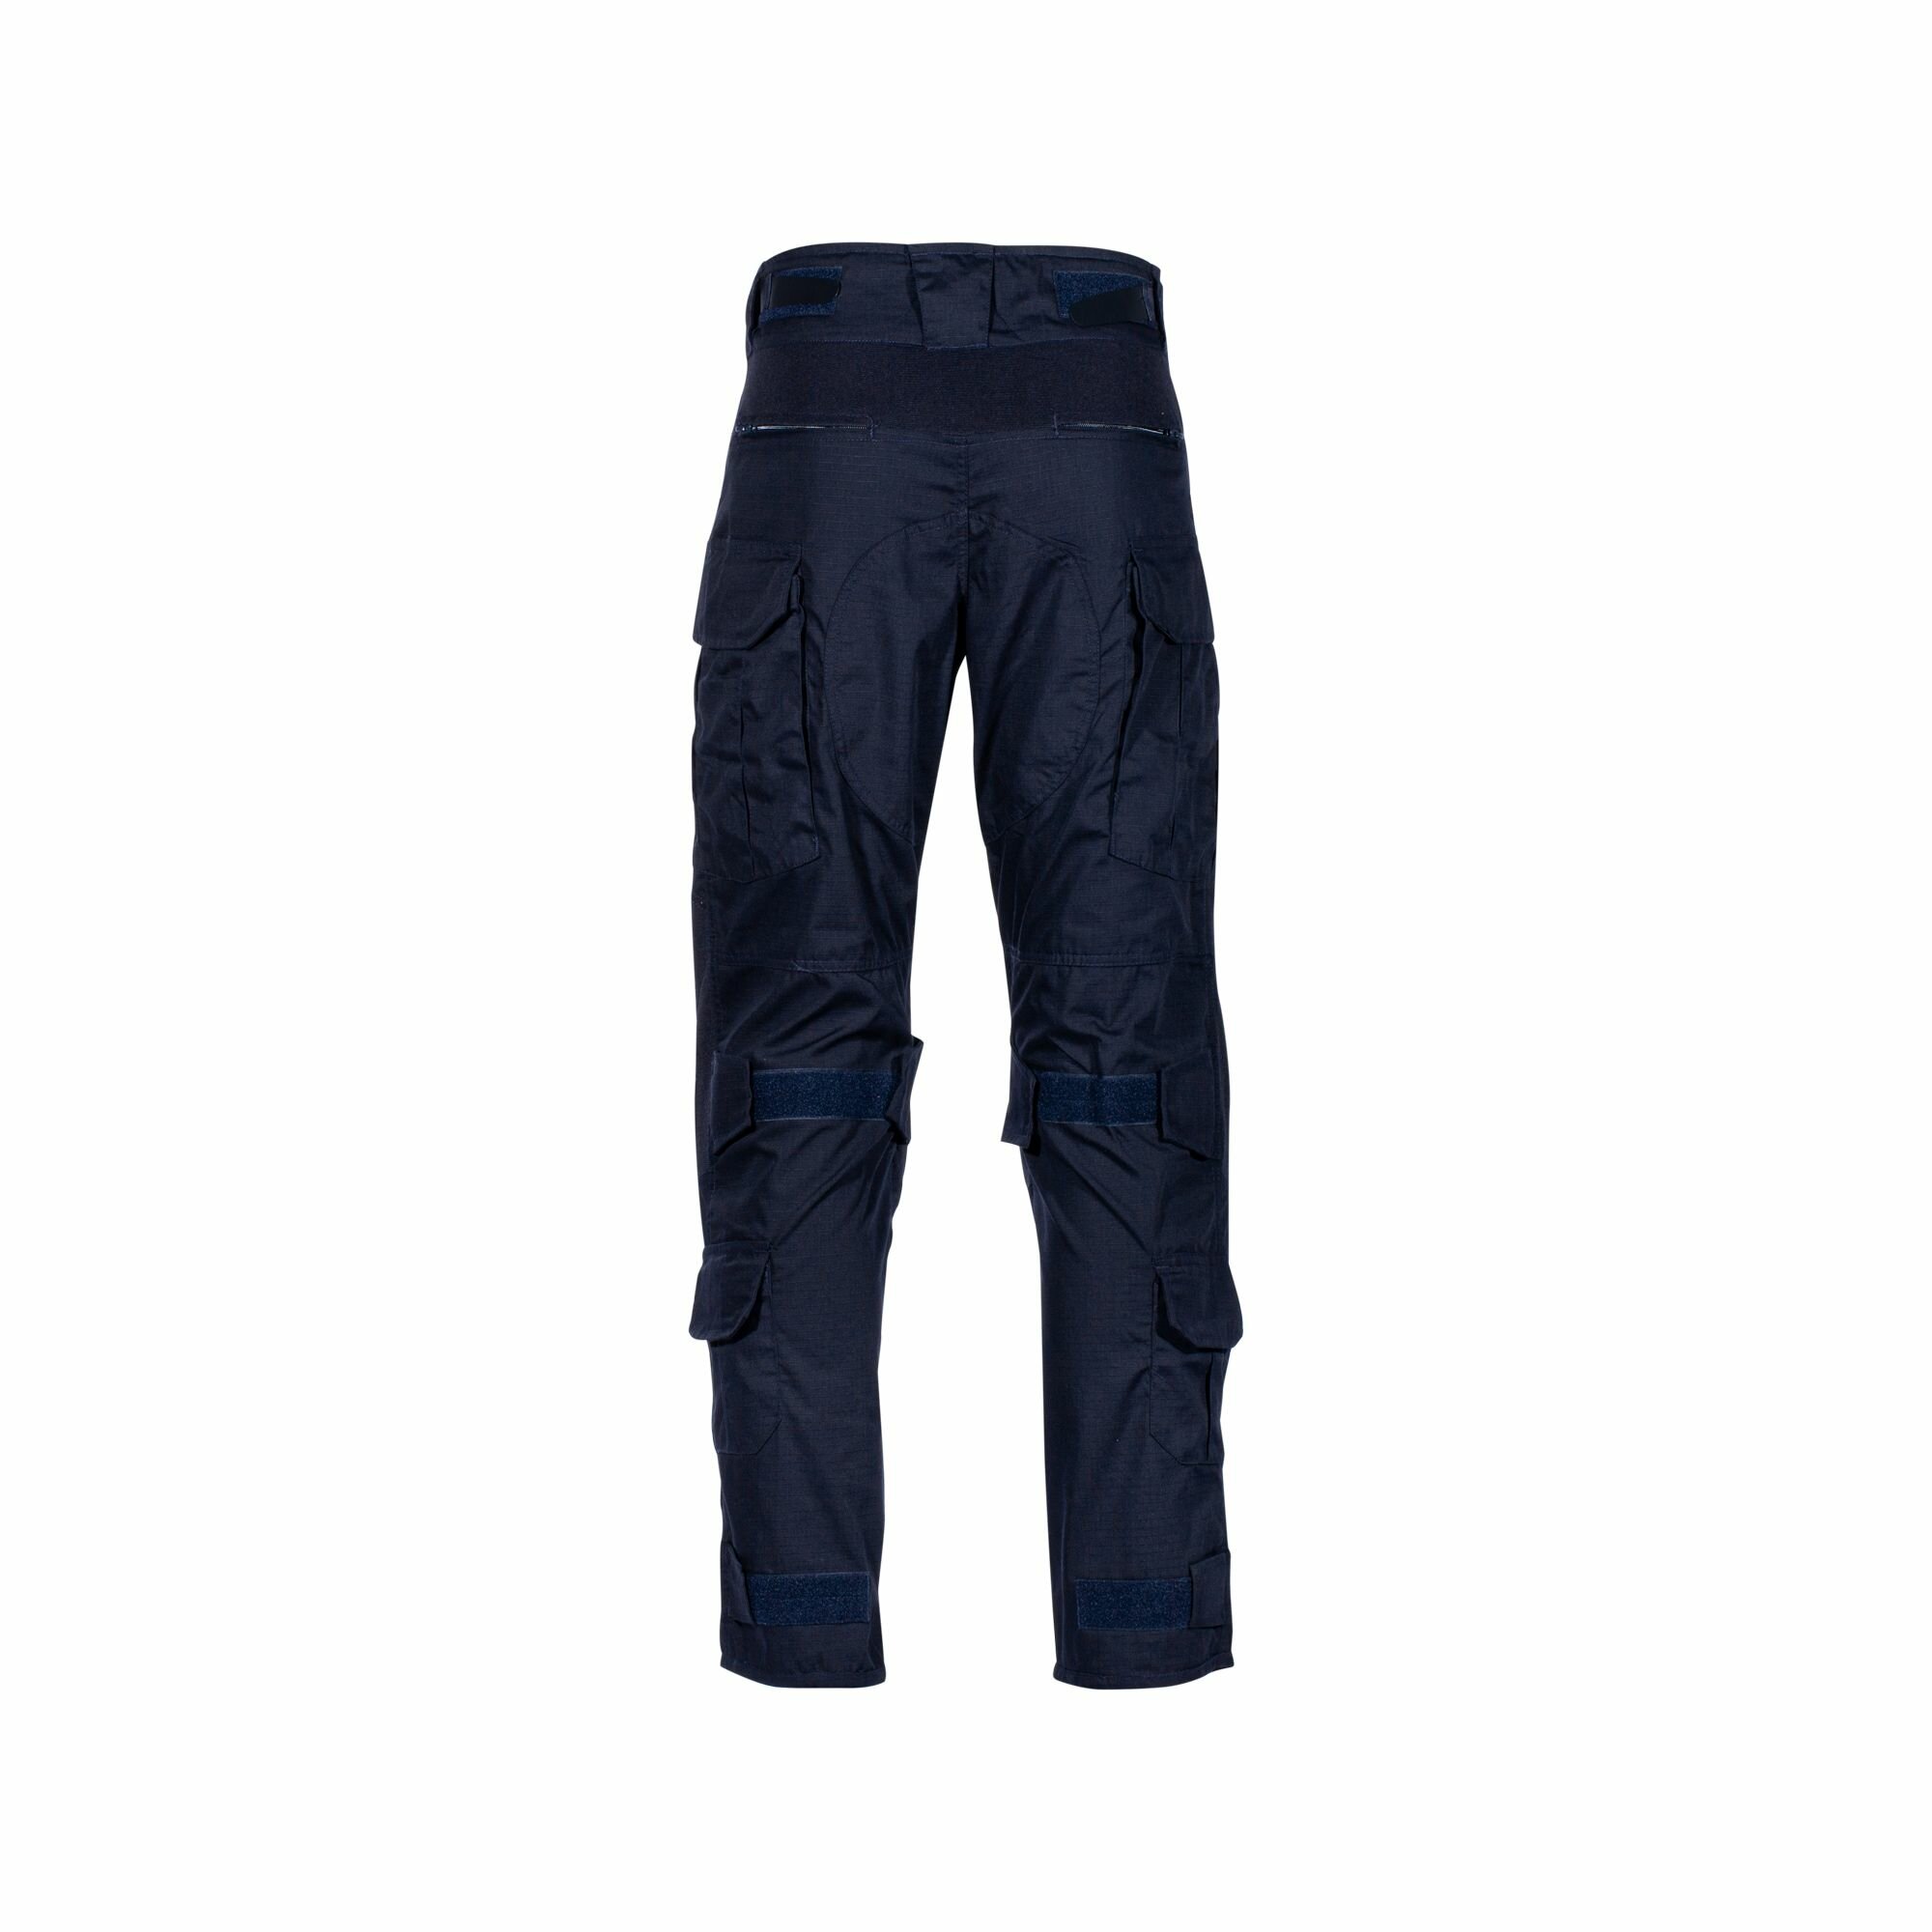 Defcon 5 Gladio Tactical Pants navy blue